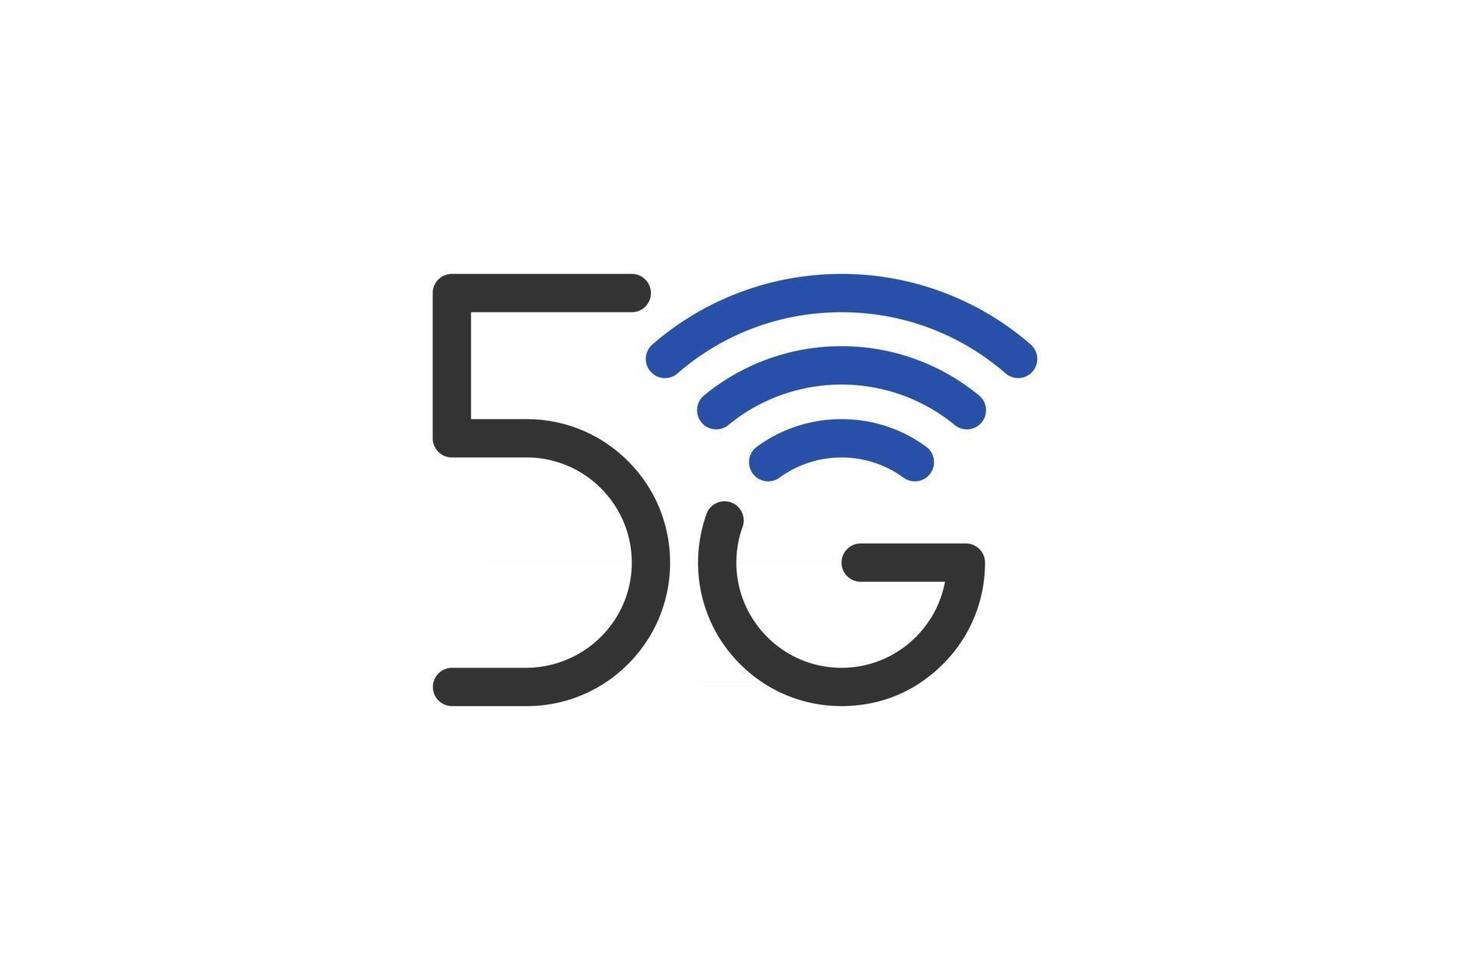 Símbolo de negocio de conexión de red 5g. Icono de tecnología de internet inalámbrica de quinta generación. vector, 5 g, comunicación, emblema, azul, diseño, plantilla, aislado vector